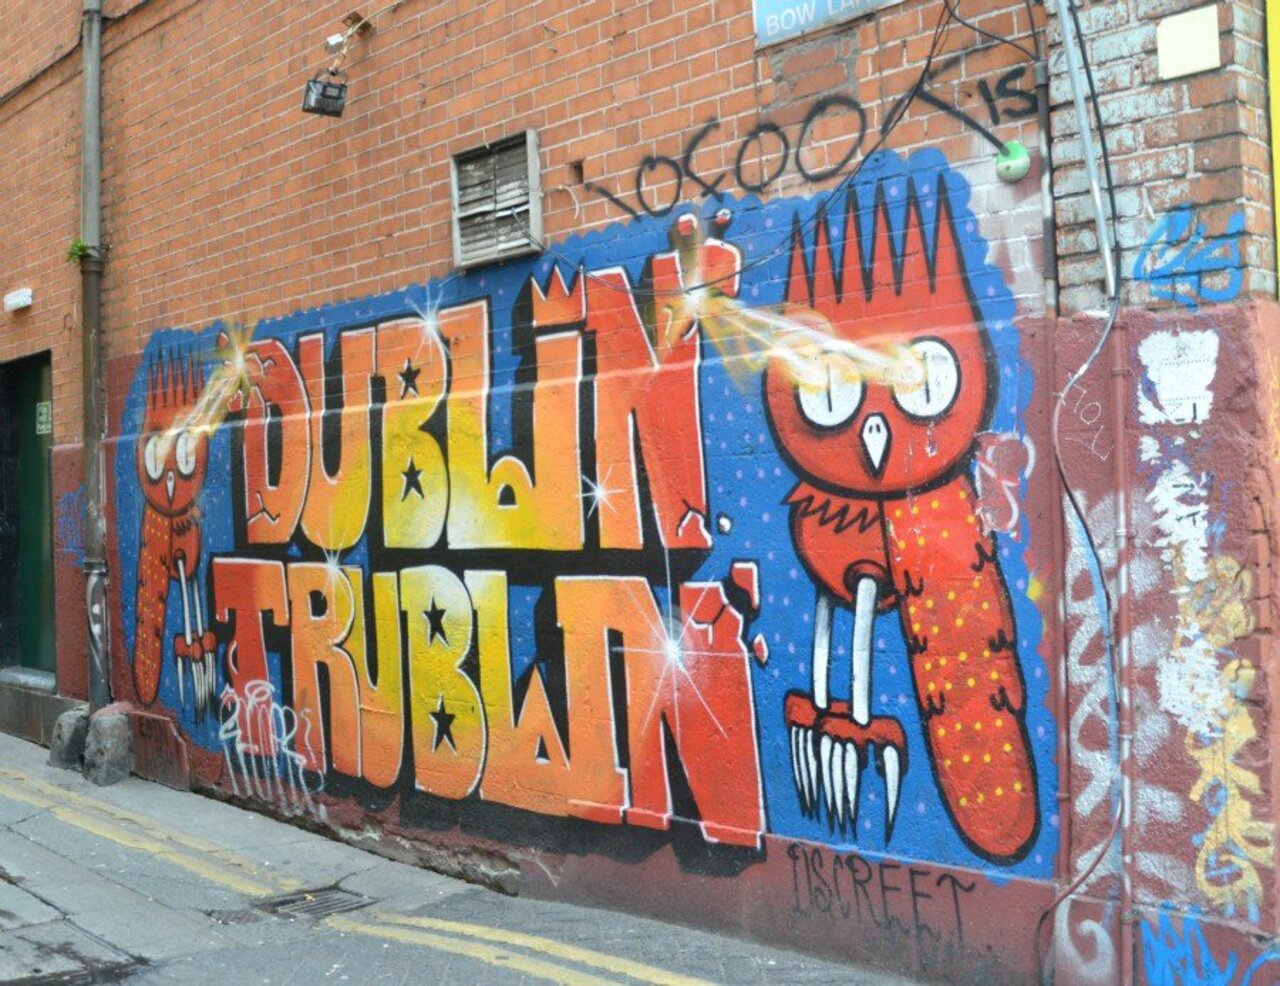 RT @waheedaharris: My view of #Dublin - colourful #graffiti sign spotted downtown #streetart https://waheedaharris.wordpress.com/2015/10/26/ahh-dublin https://t.co/gAi5vW7gio